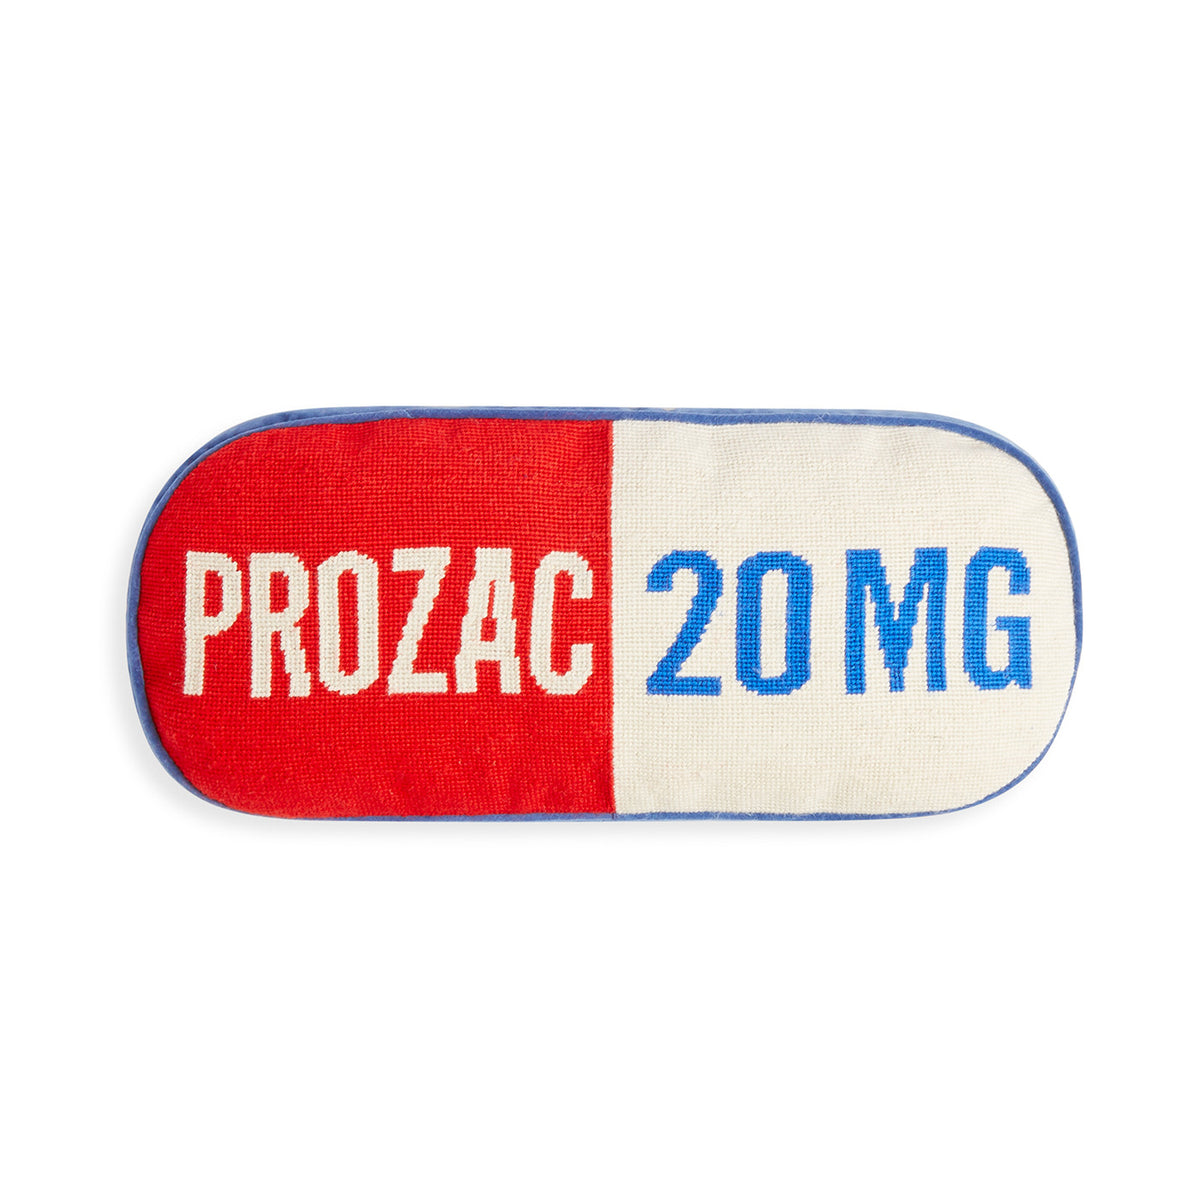 Prescription Prozac Throw Pillow by Jonathan Adler